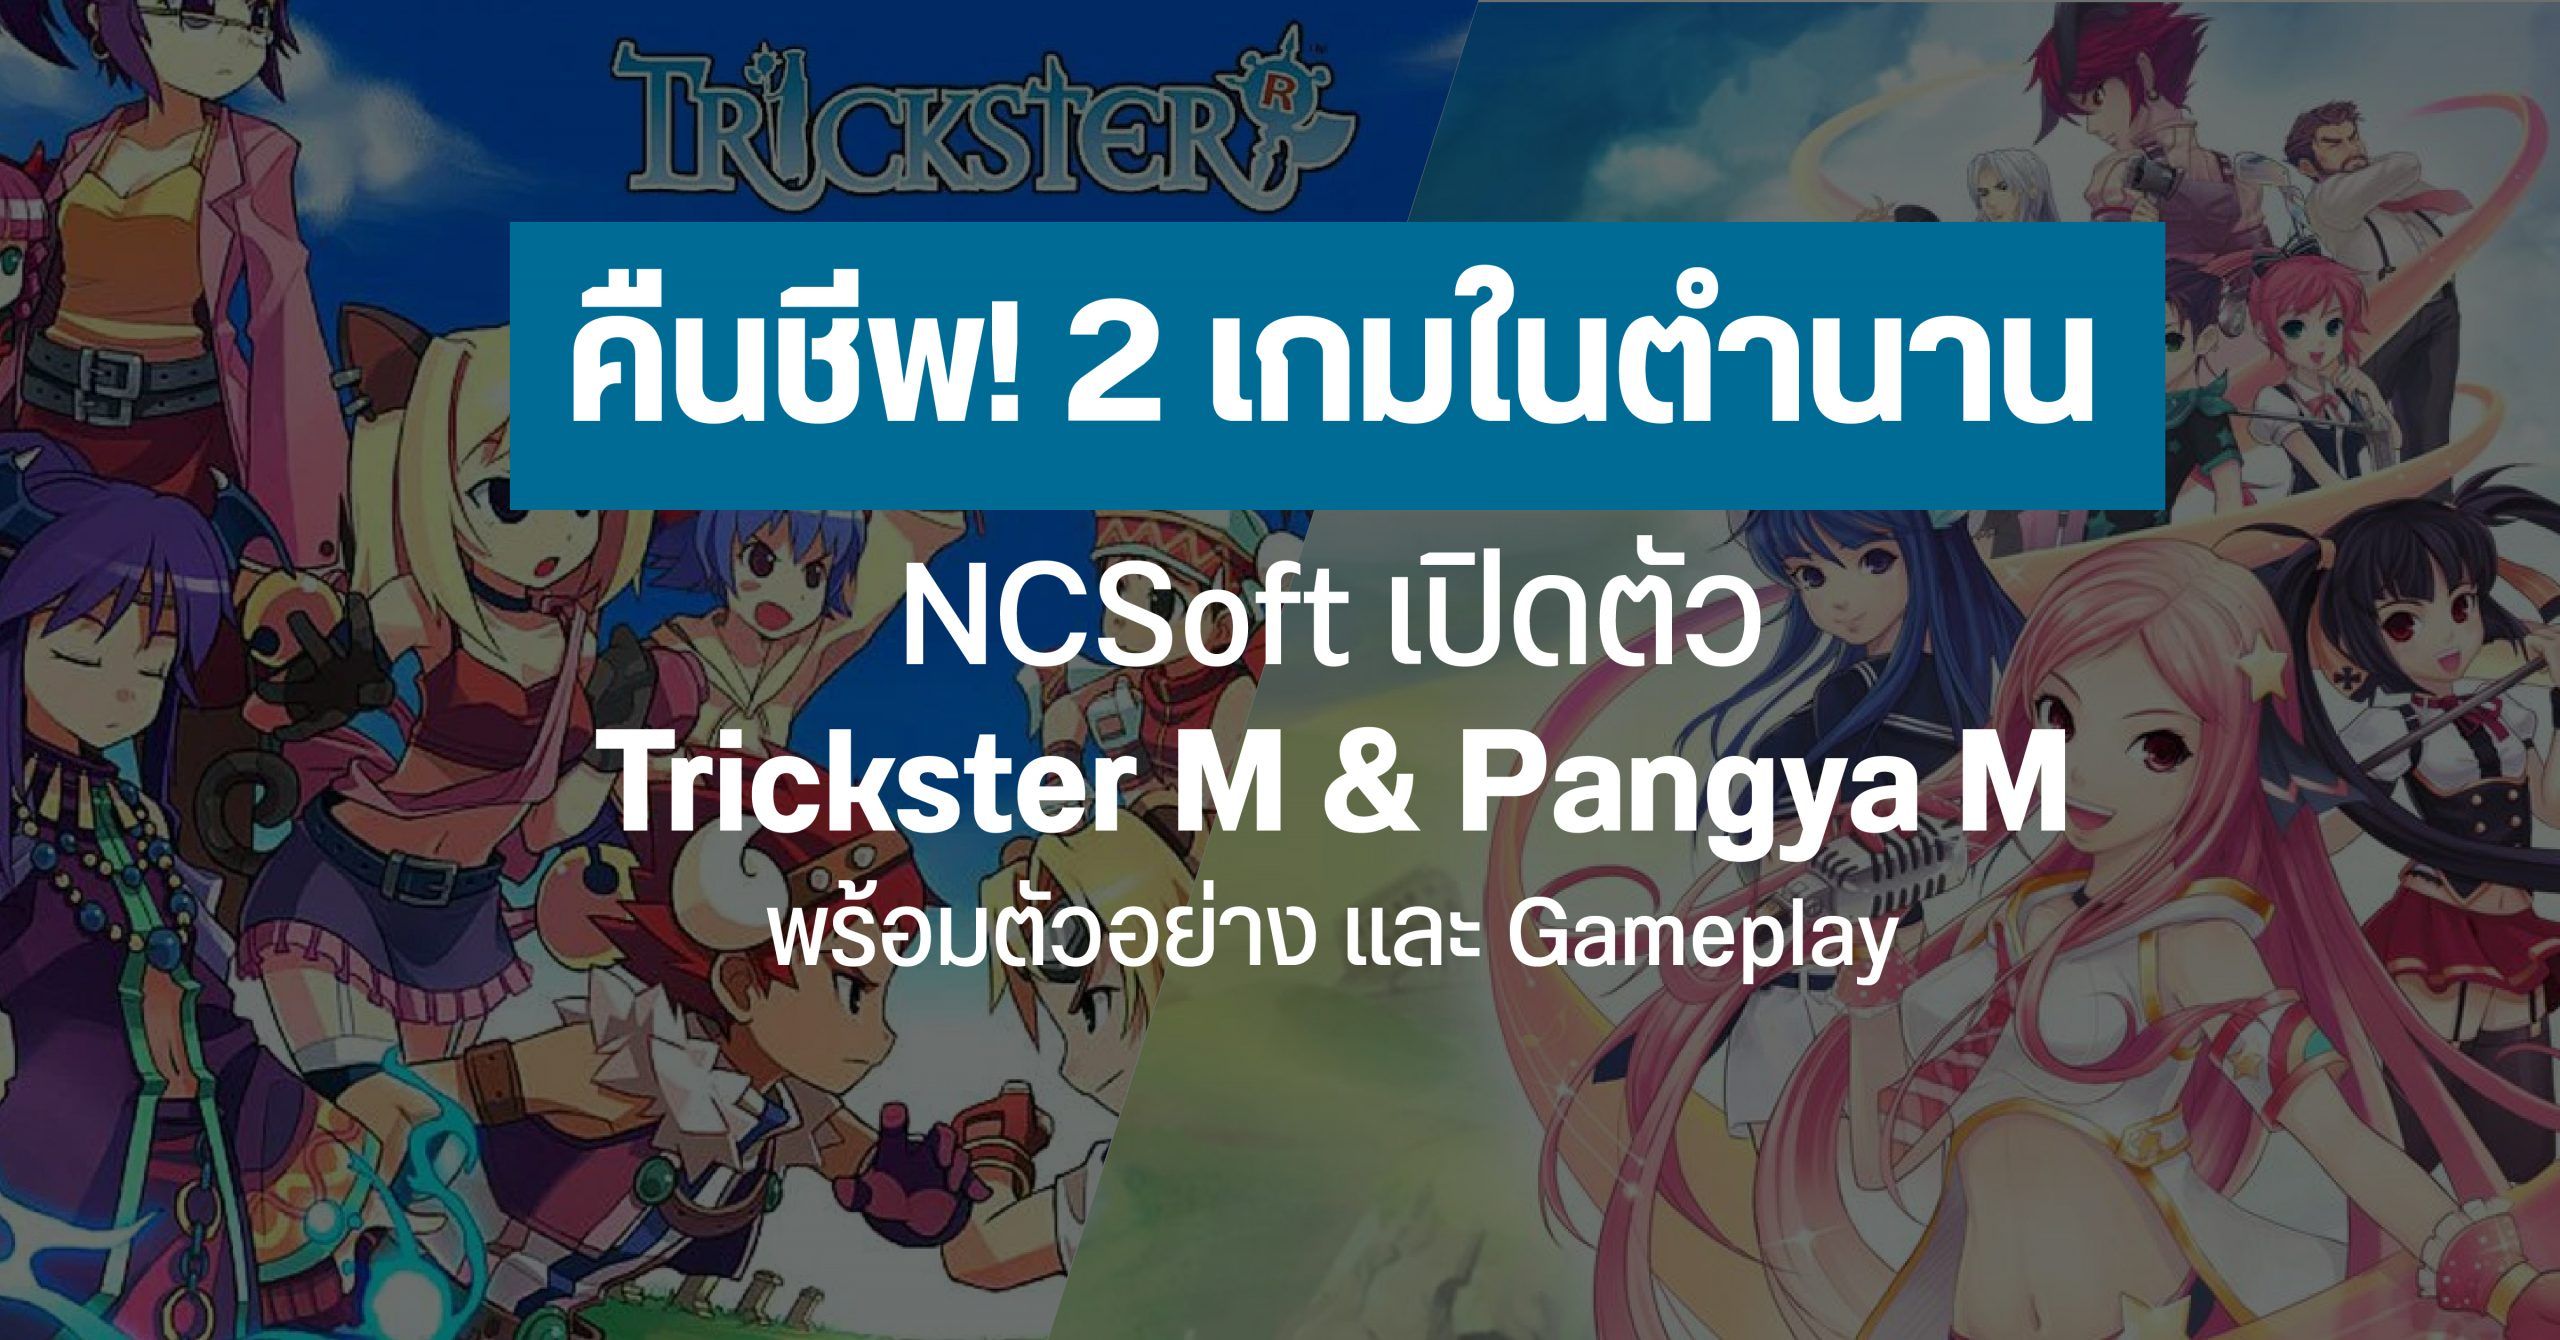 NCsoft ปลุกผีเกมในตำนาน Trickster และ Pangya เตรียมเปิดตัวบนมือถือเร็วๆ นี้